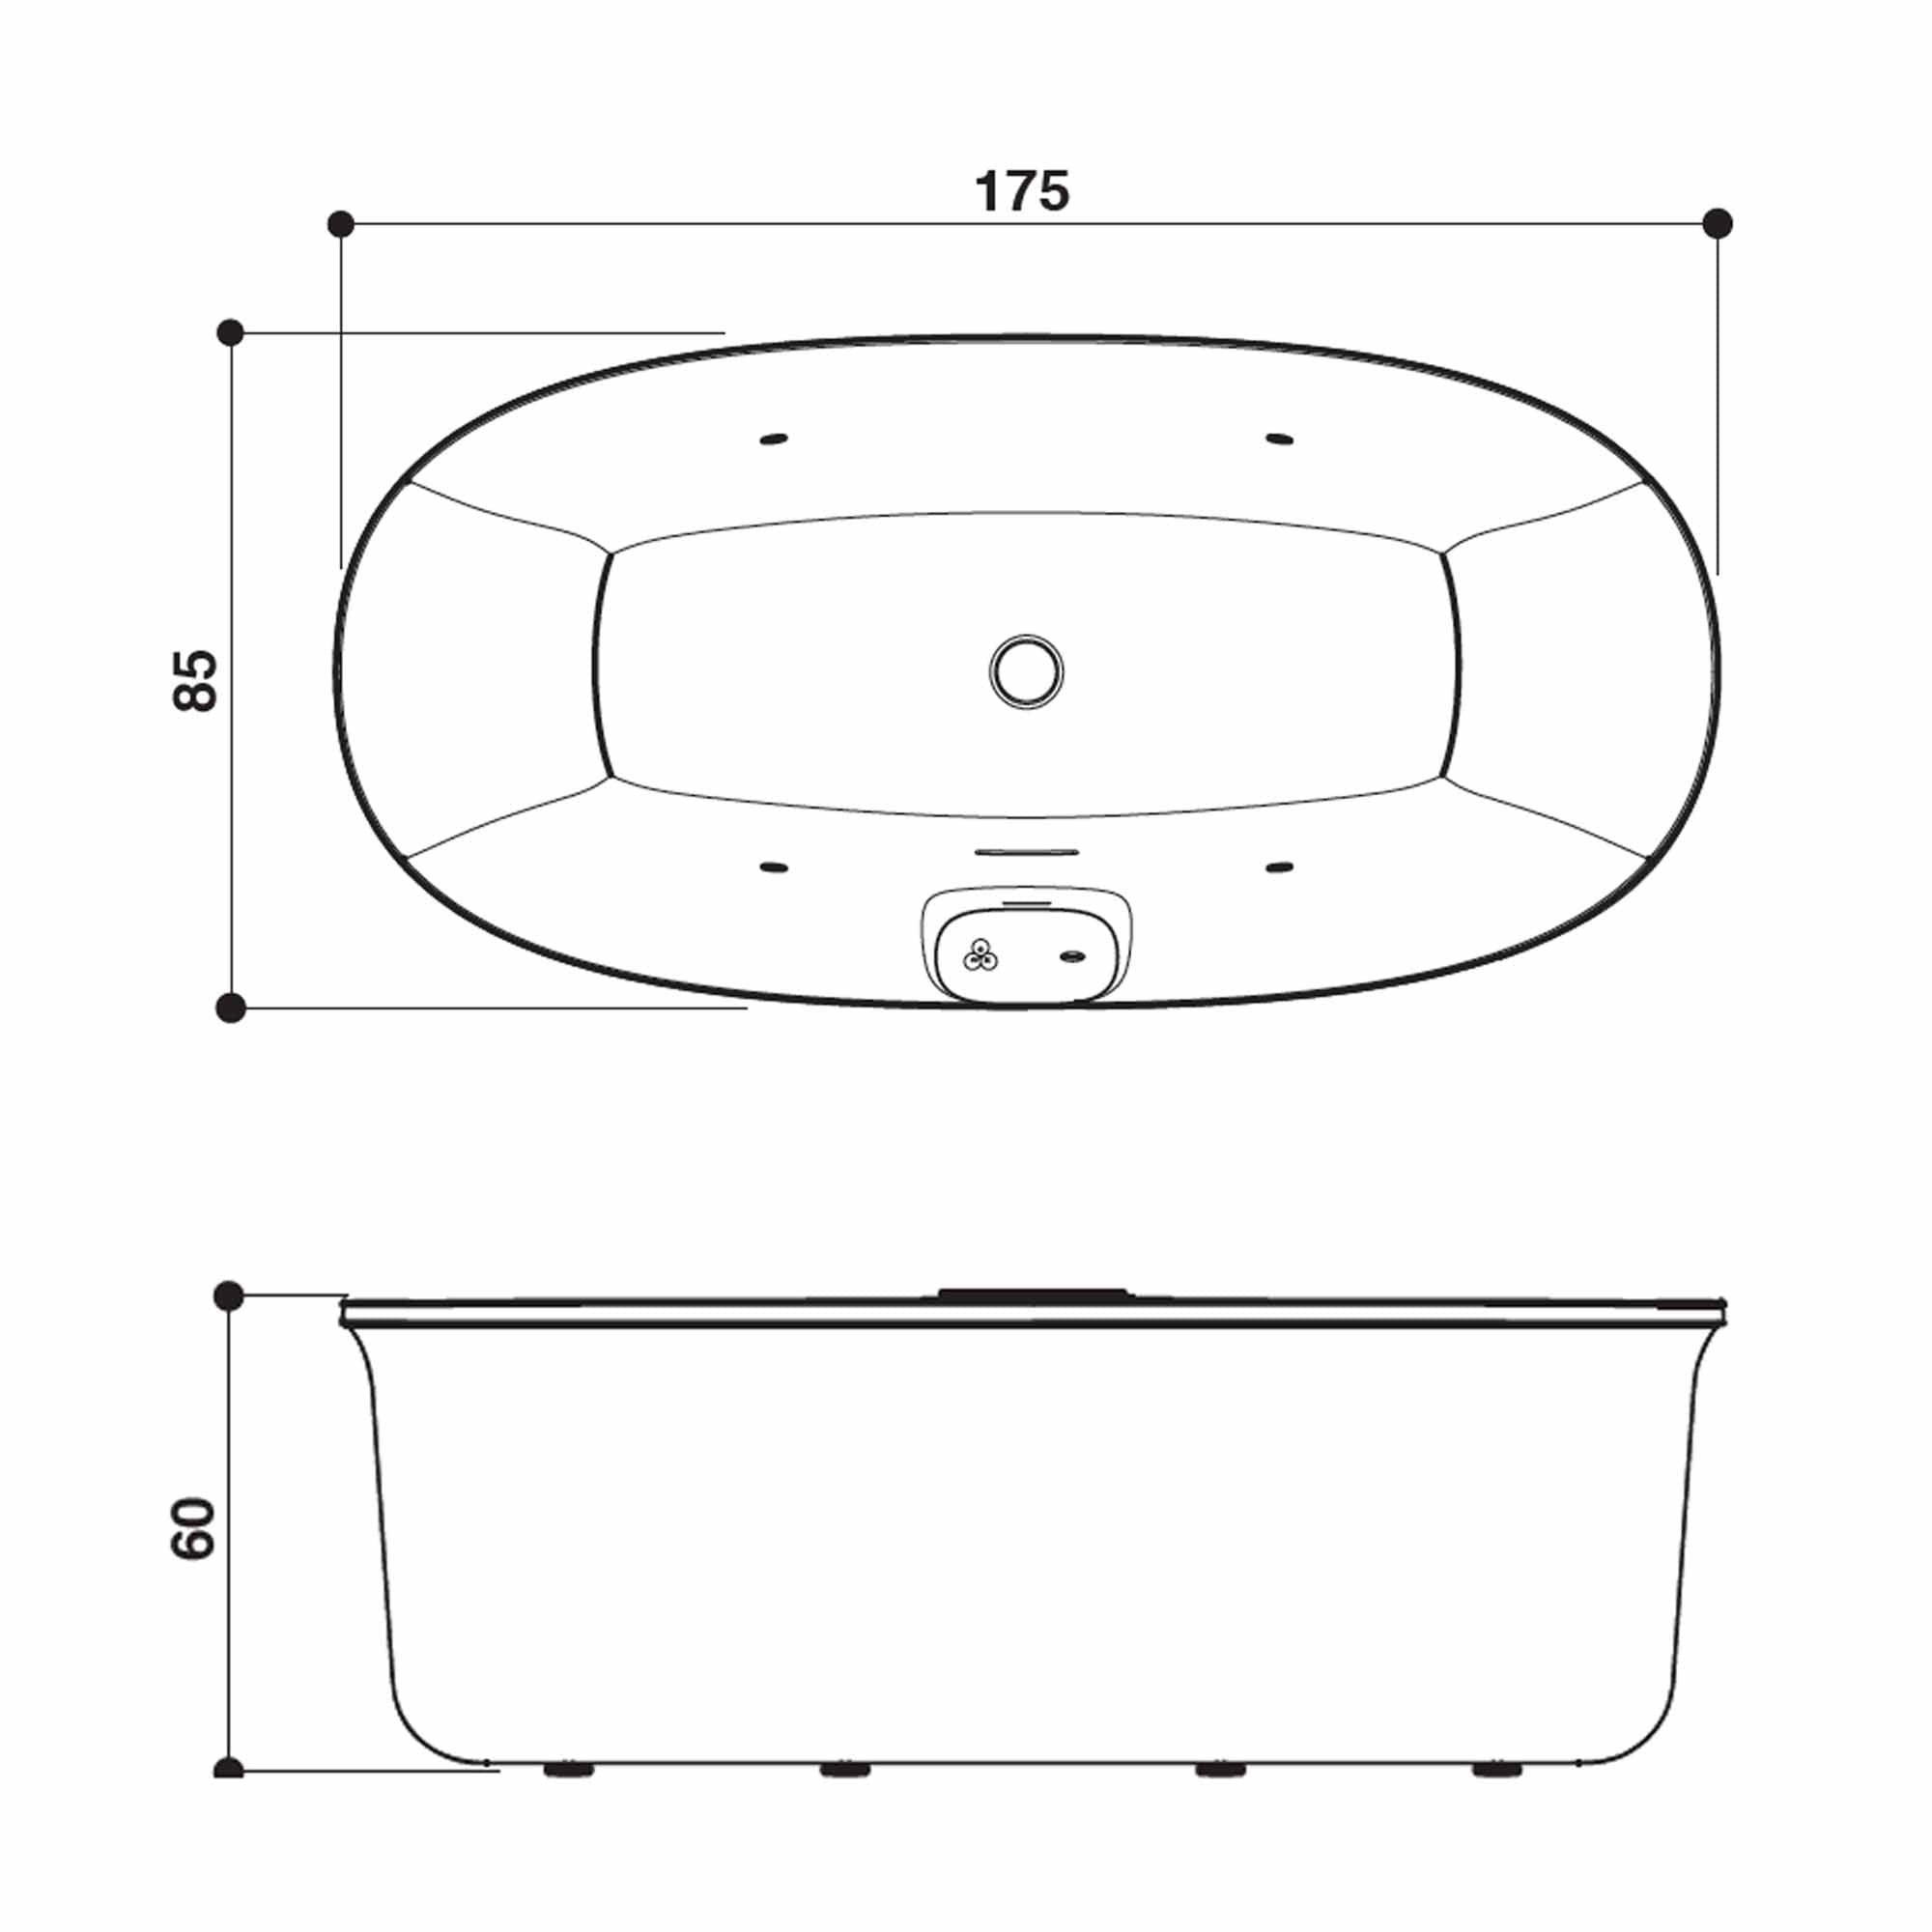 jacuzzi arga 1750 freestanding whirlpool bath dimensions